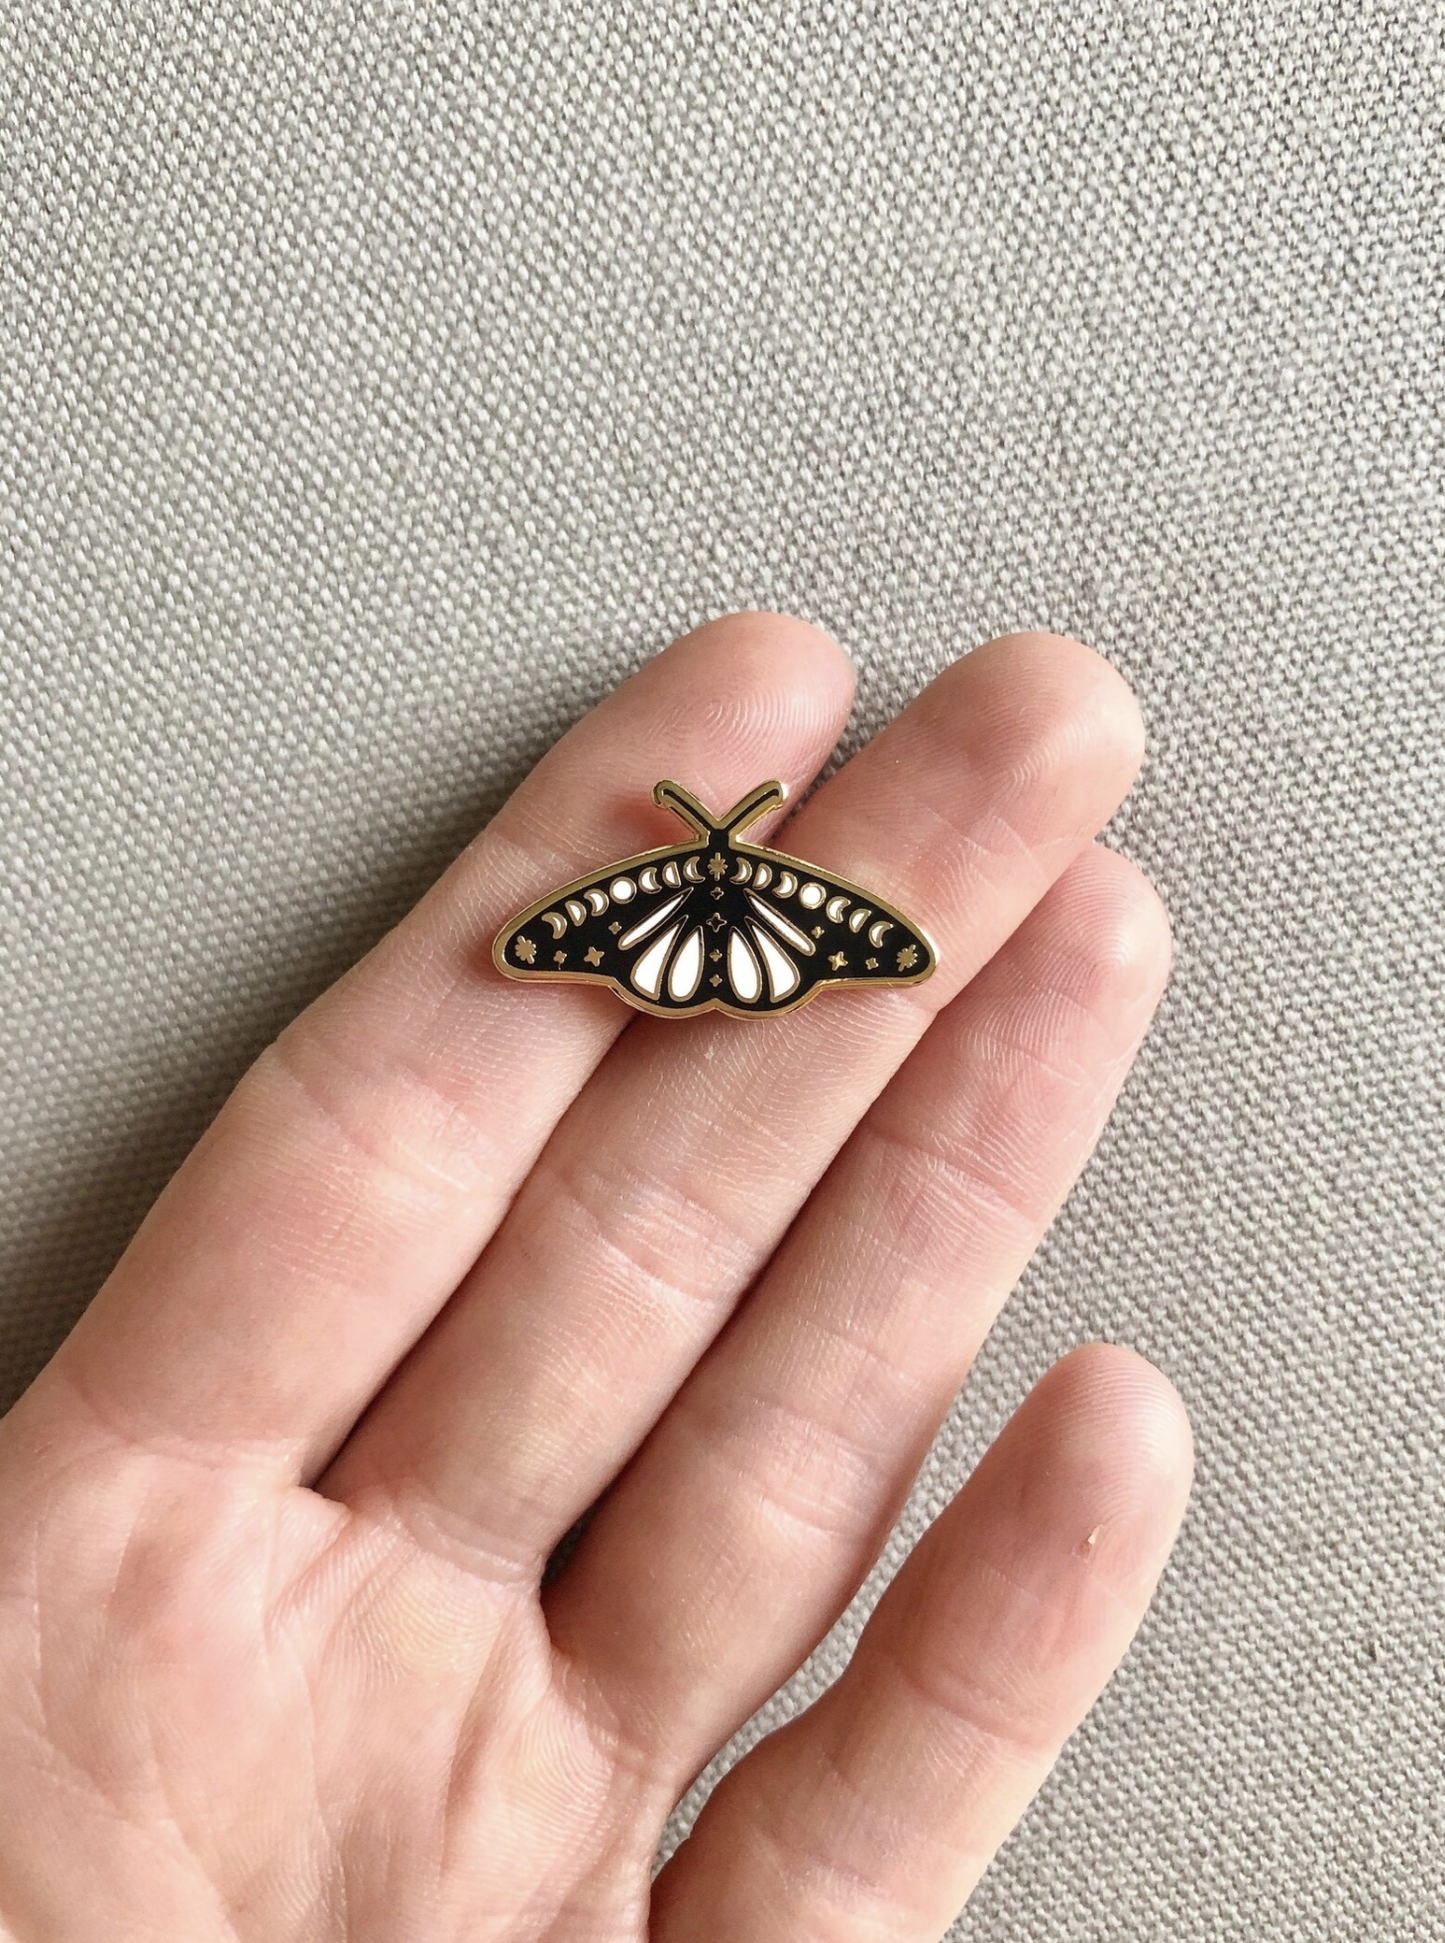 Cosmic Moth Enamel Pin